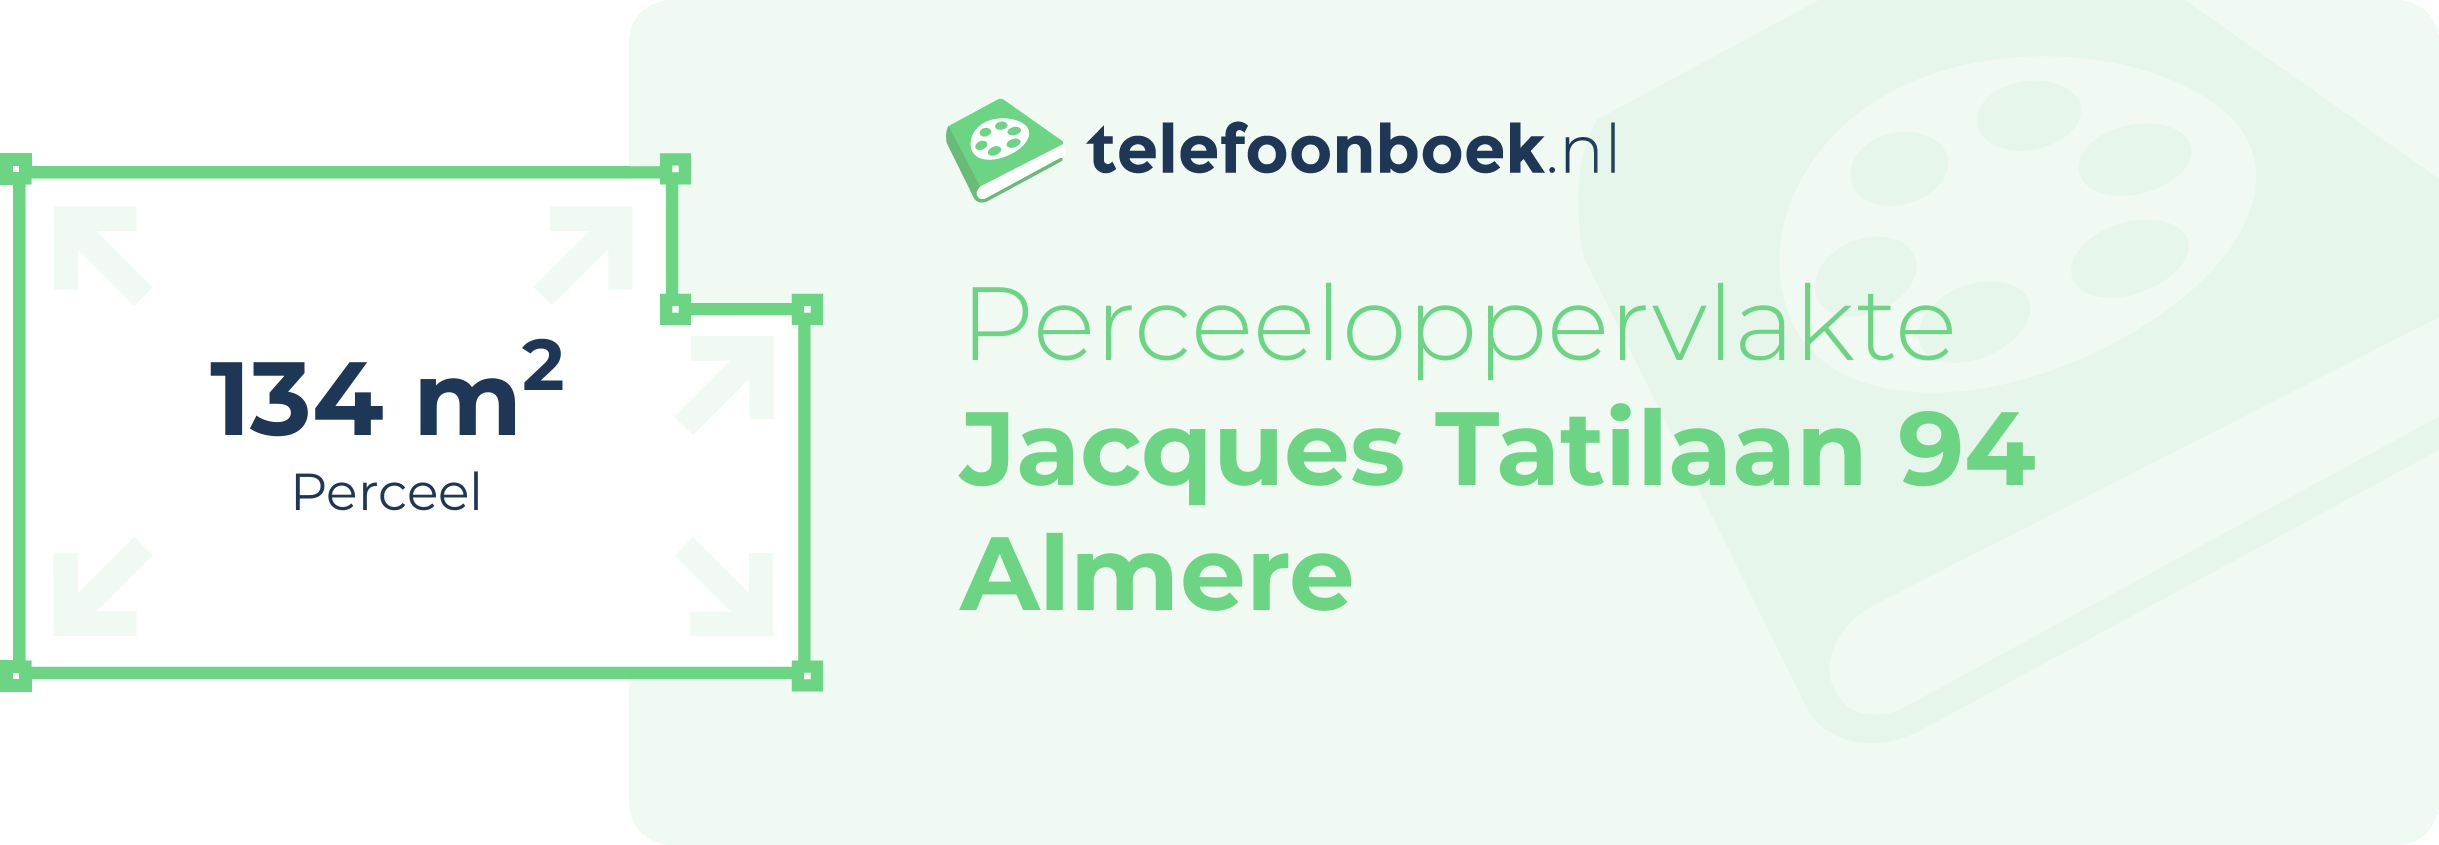 Perceeloppervlakte Jacques Tatilaan 94 Almere